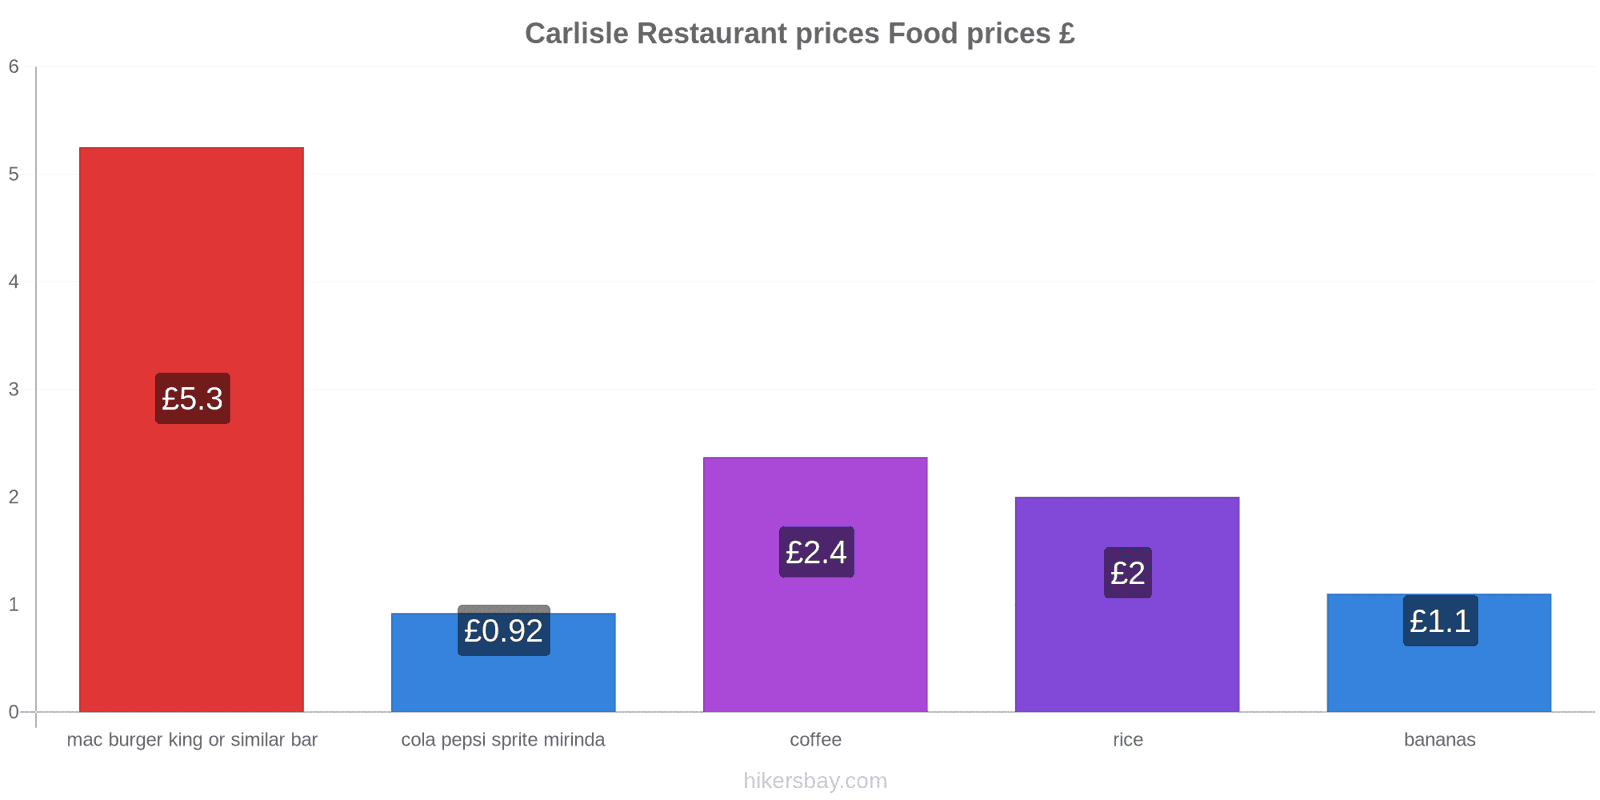 Carlisle price changes hikersbay.com